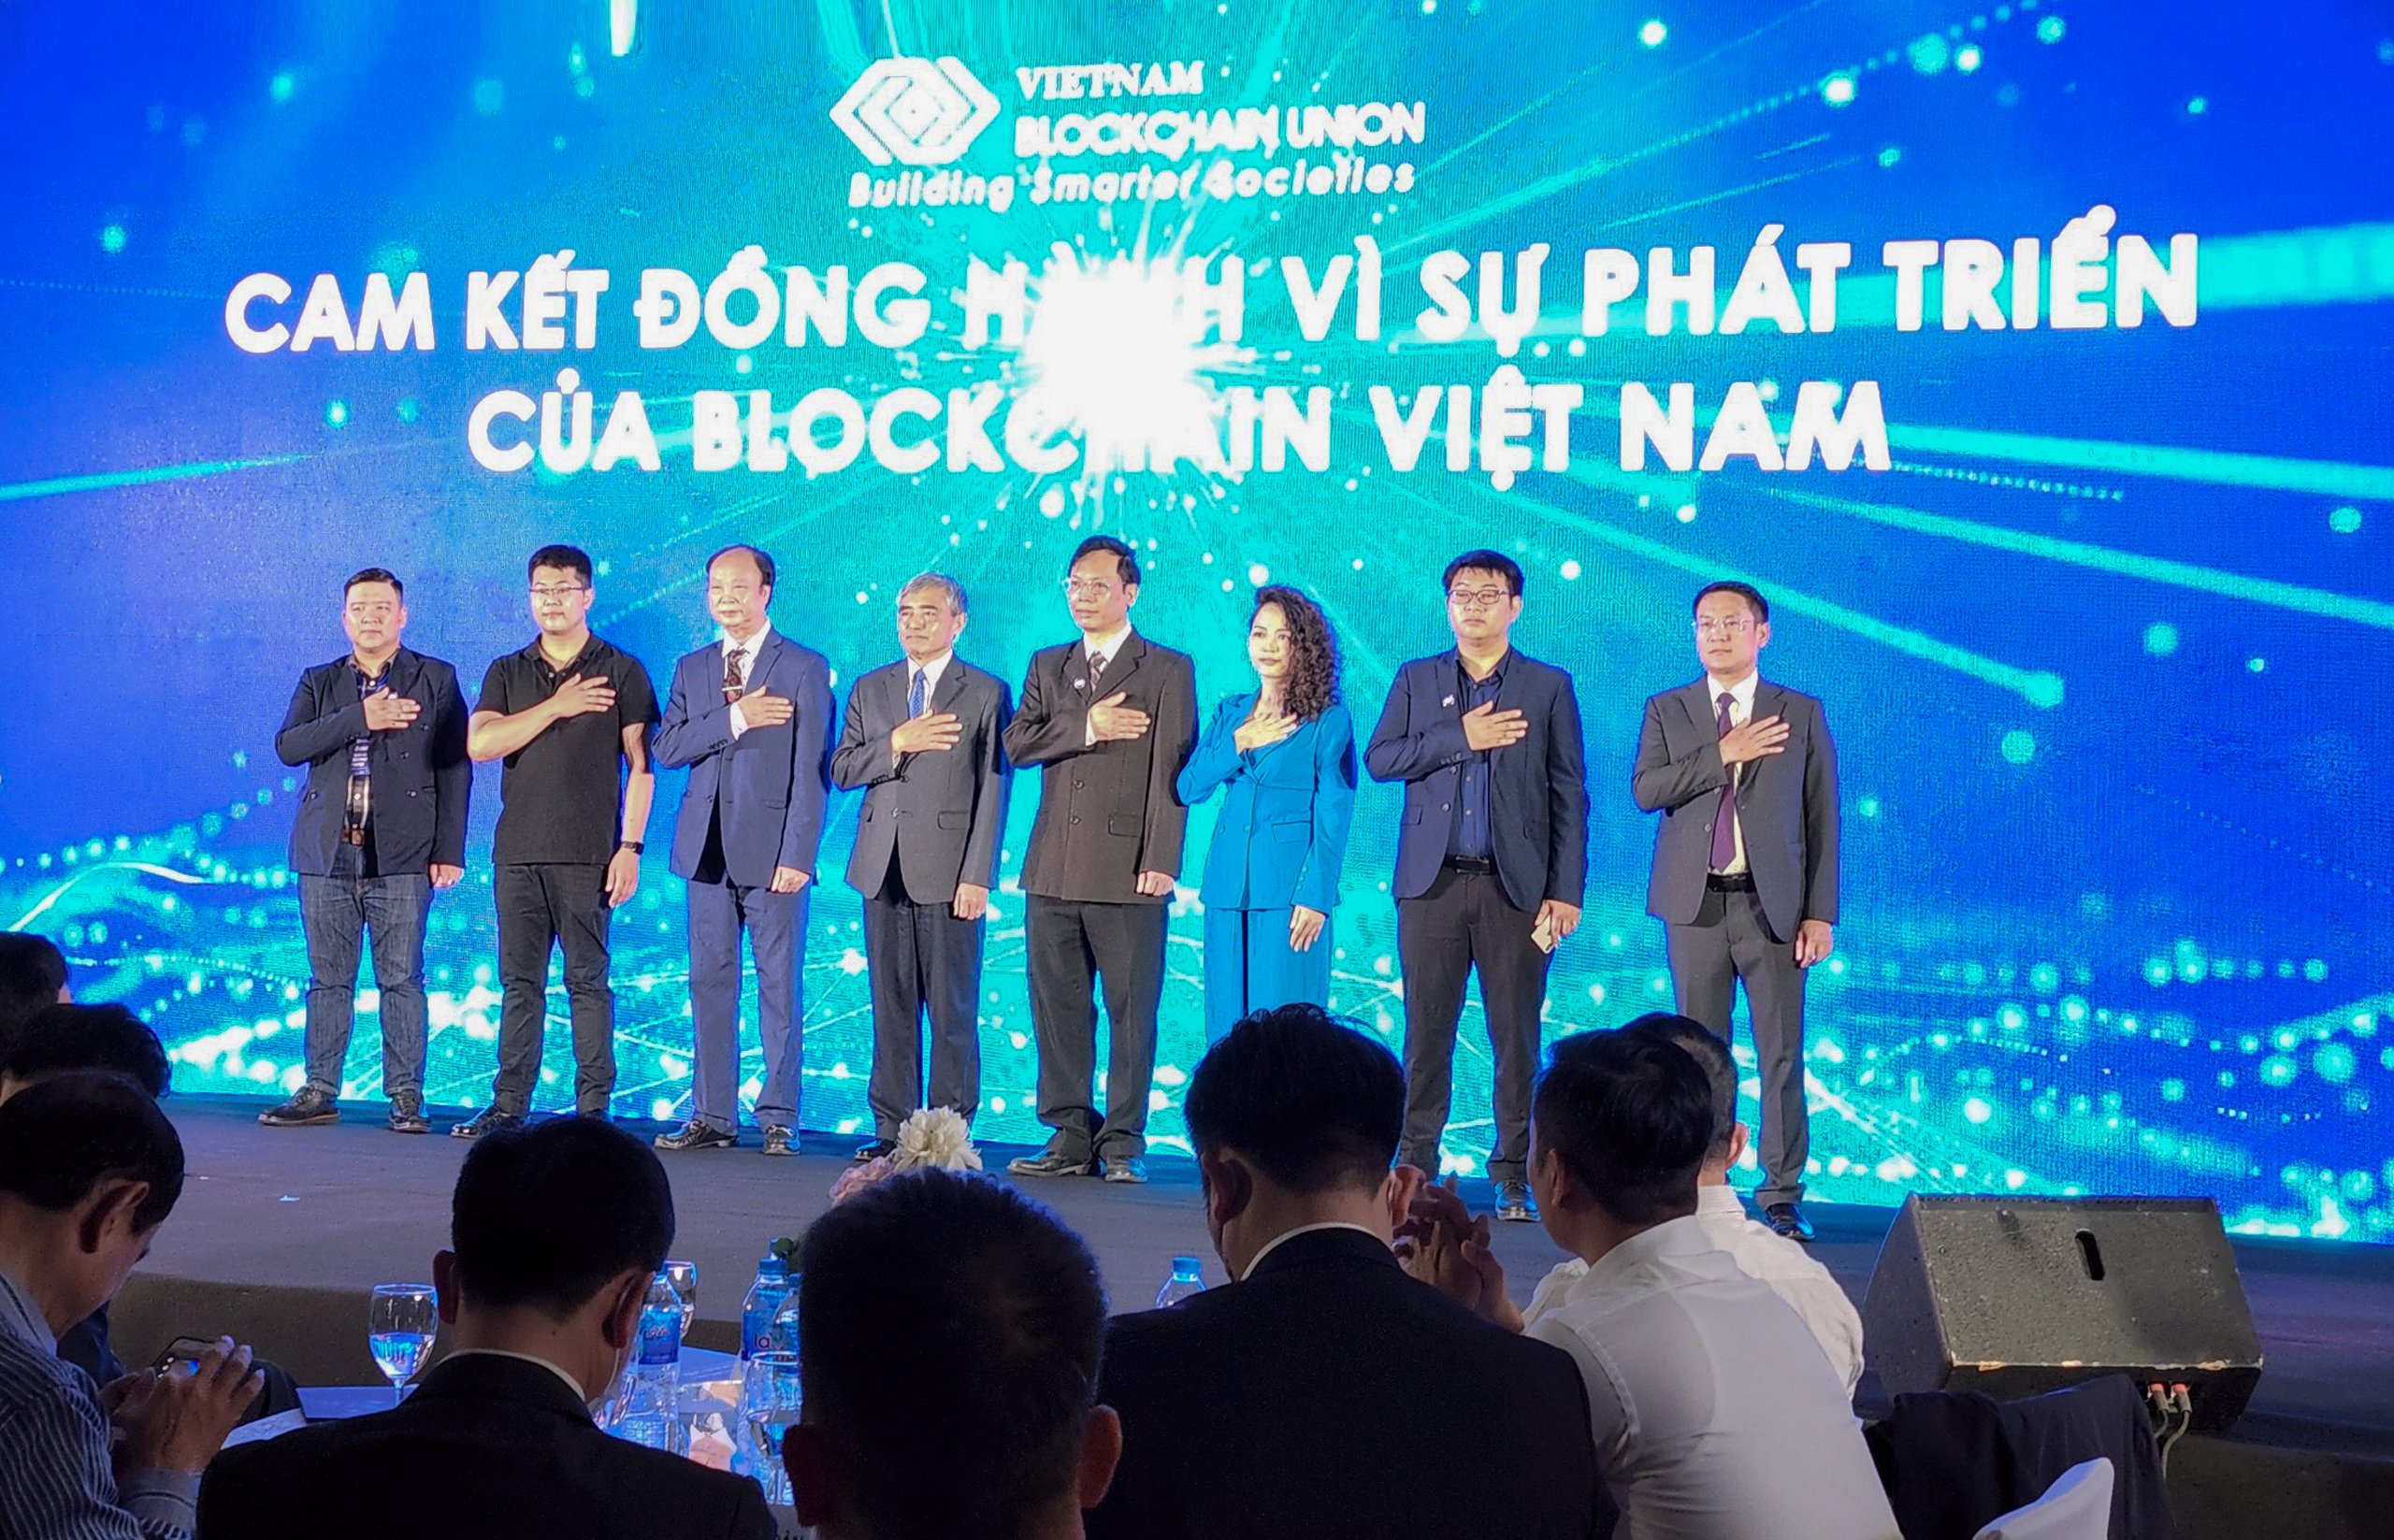 CMC is a partner of Vietnam Blockchain Union